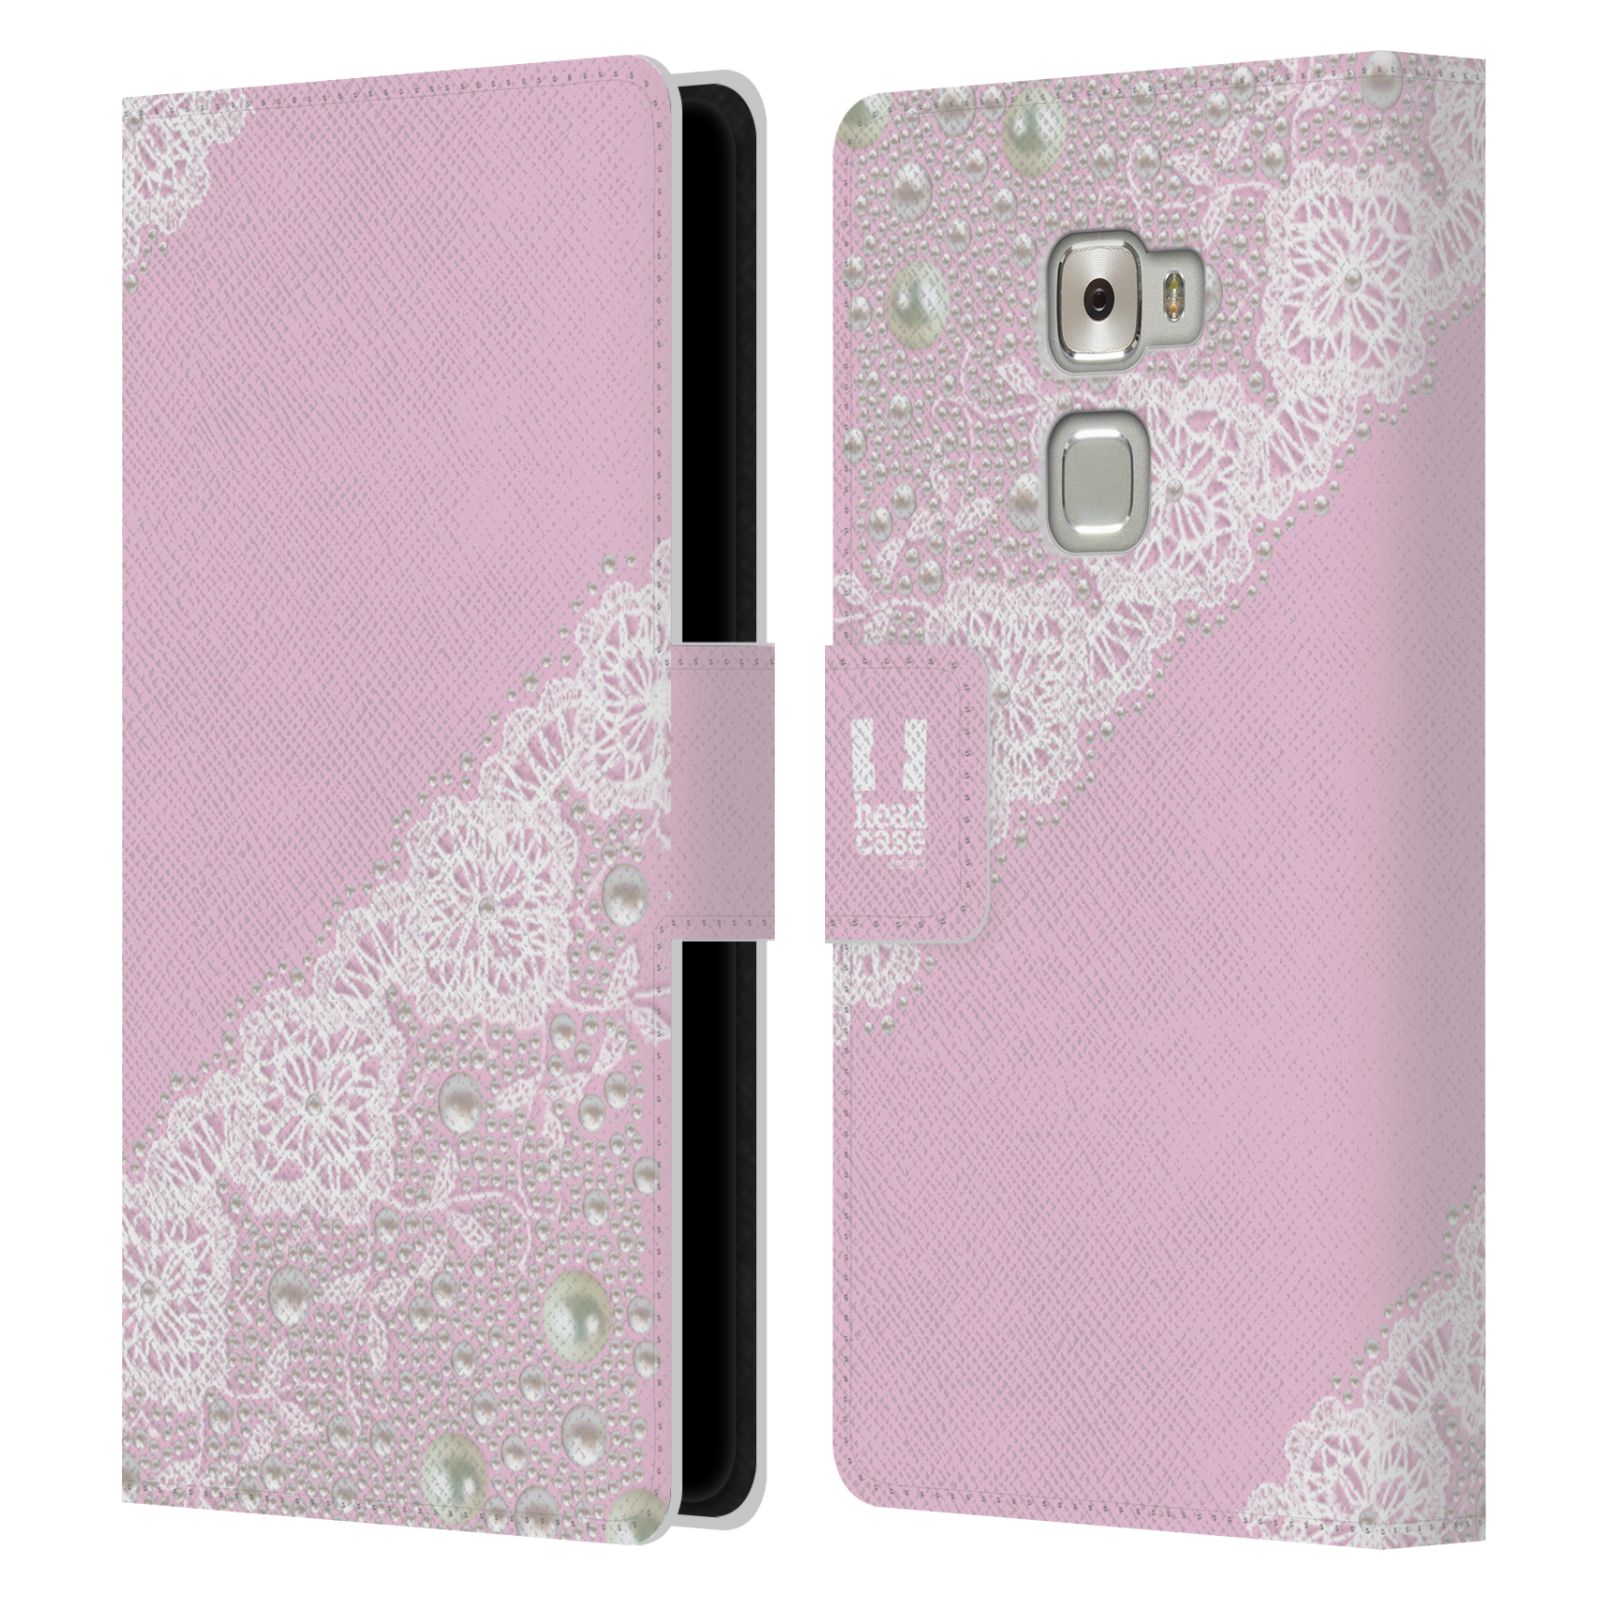 HEAD CASE Flipové pouzdro pro mobil Huawei MATE S krajka růžová barva